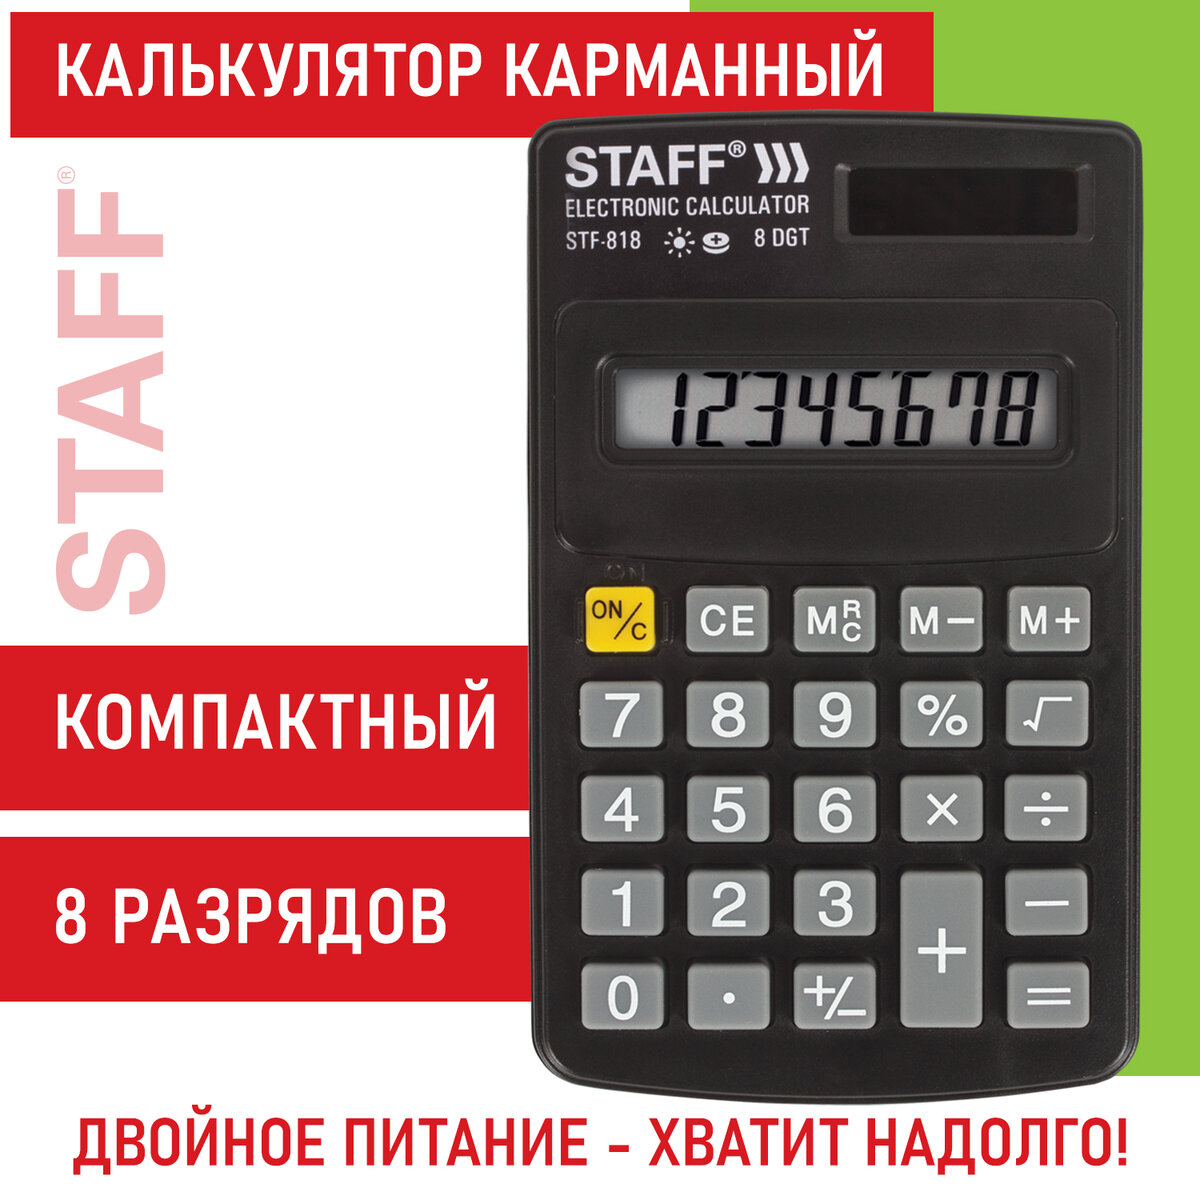 Калькулятор карманный STAFF STF-818 (102х62мм), 8 разрядов, двойное питание